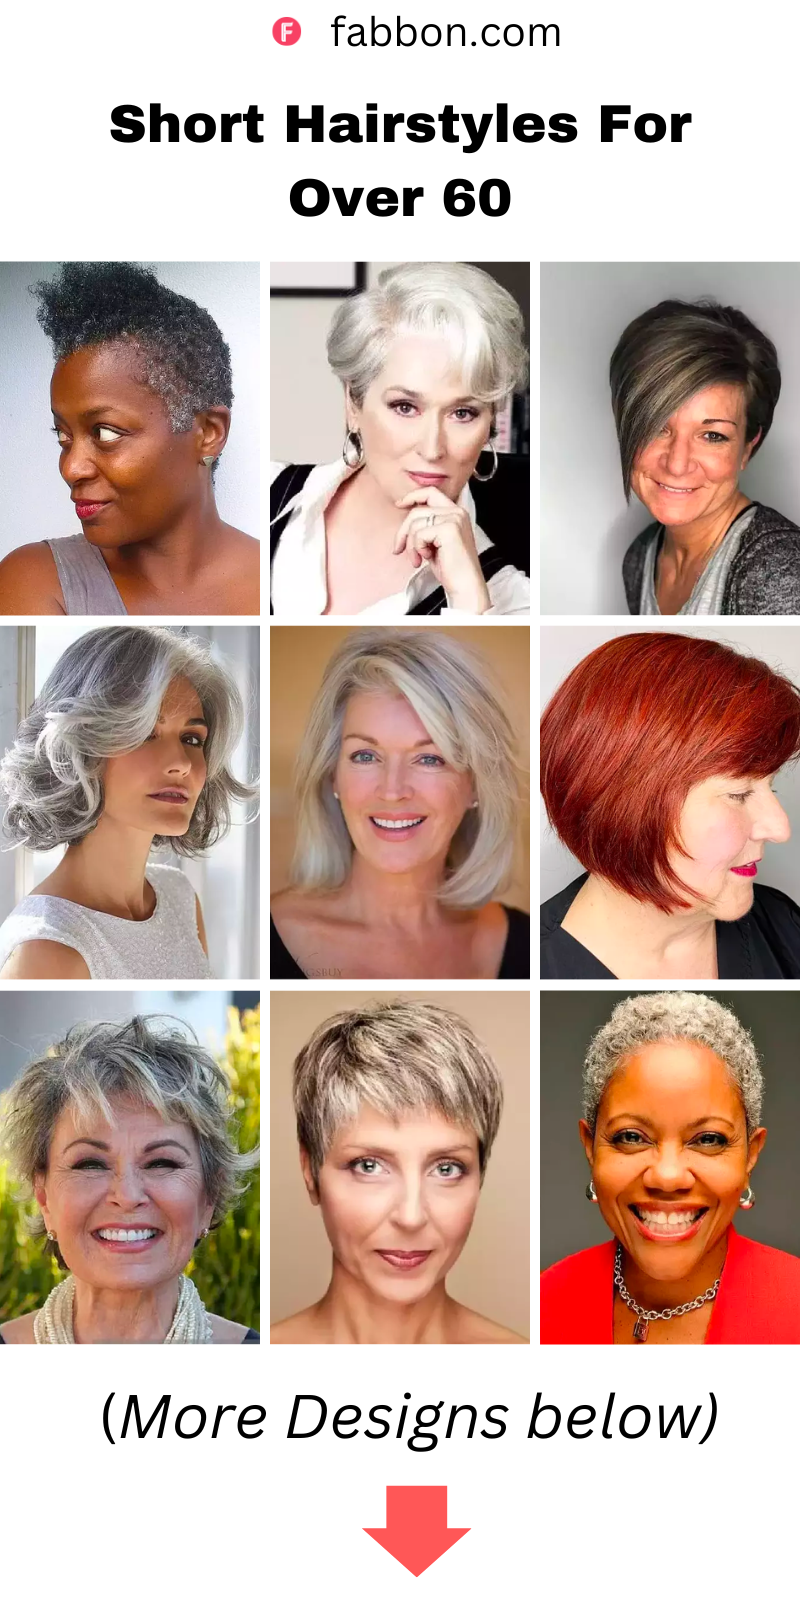 21 Best Short Haircuts For Fine Hair - Feed Inspiration | Kurzhaarfrisuren  damen rundes gesicht, Frisur kurz rundes gesicht, Haarschnitt kurz